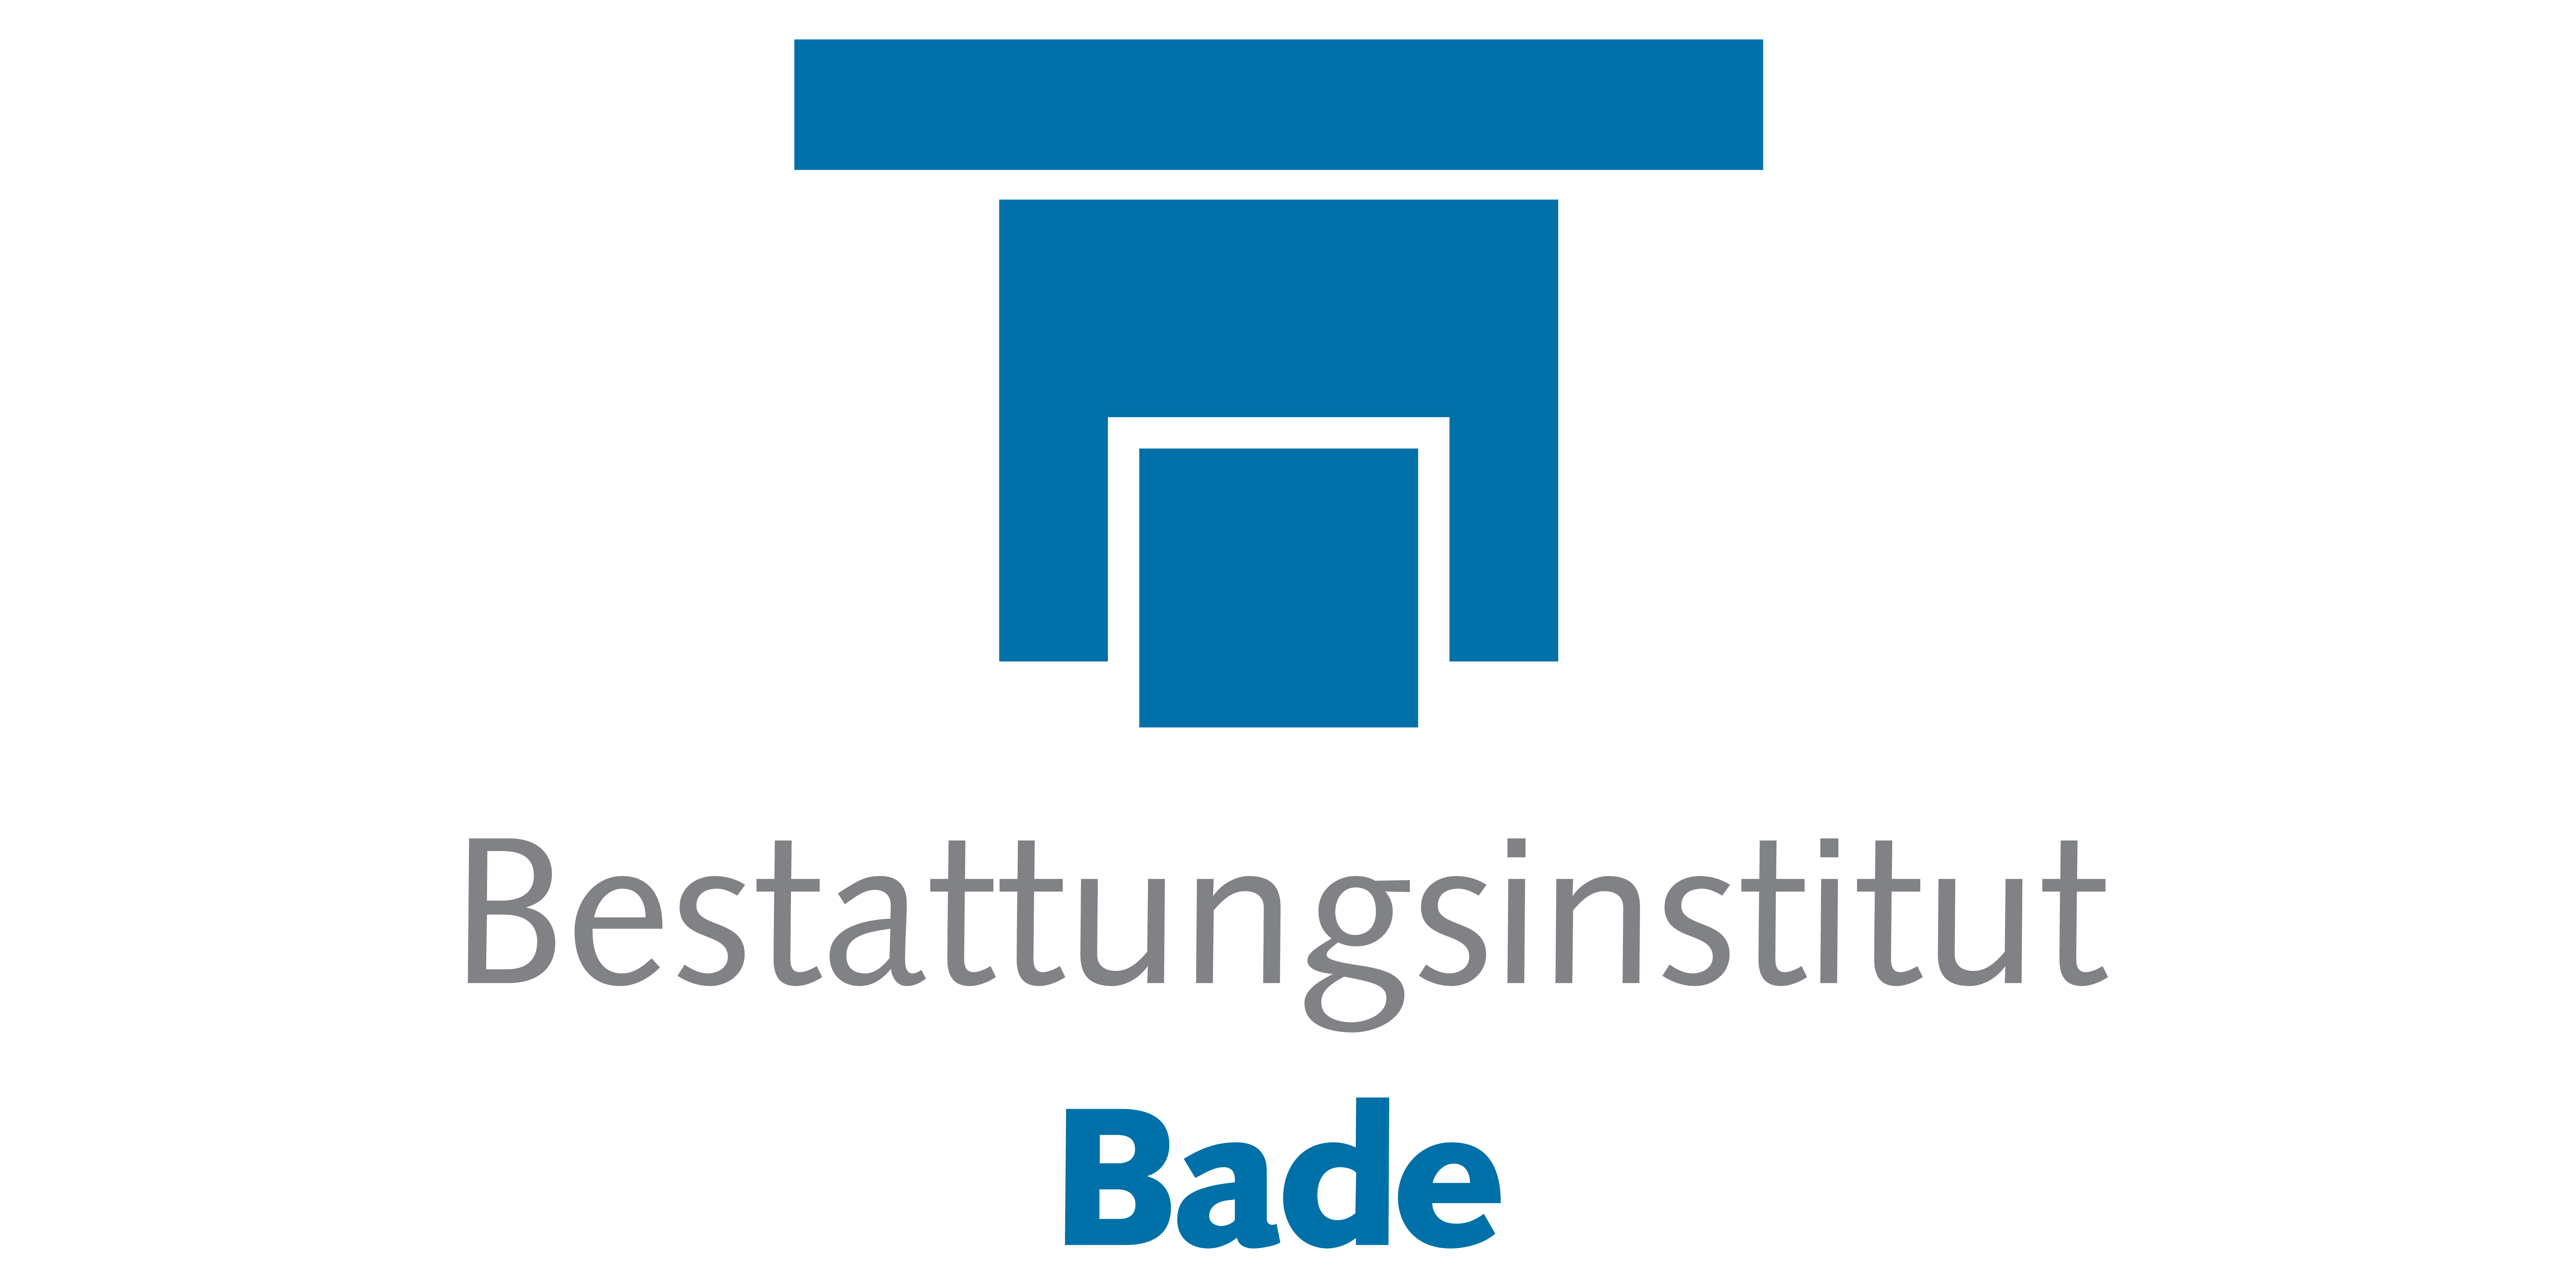 Bestattungsinstitut Bade